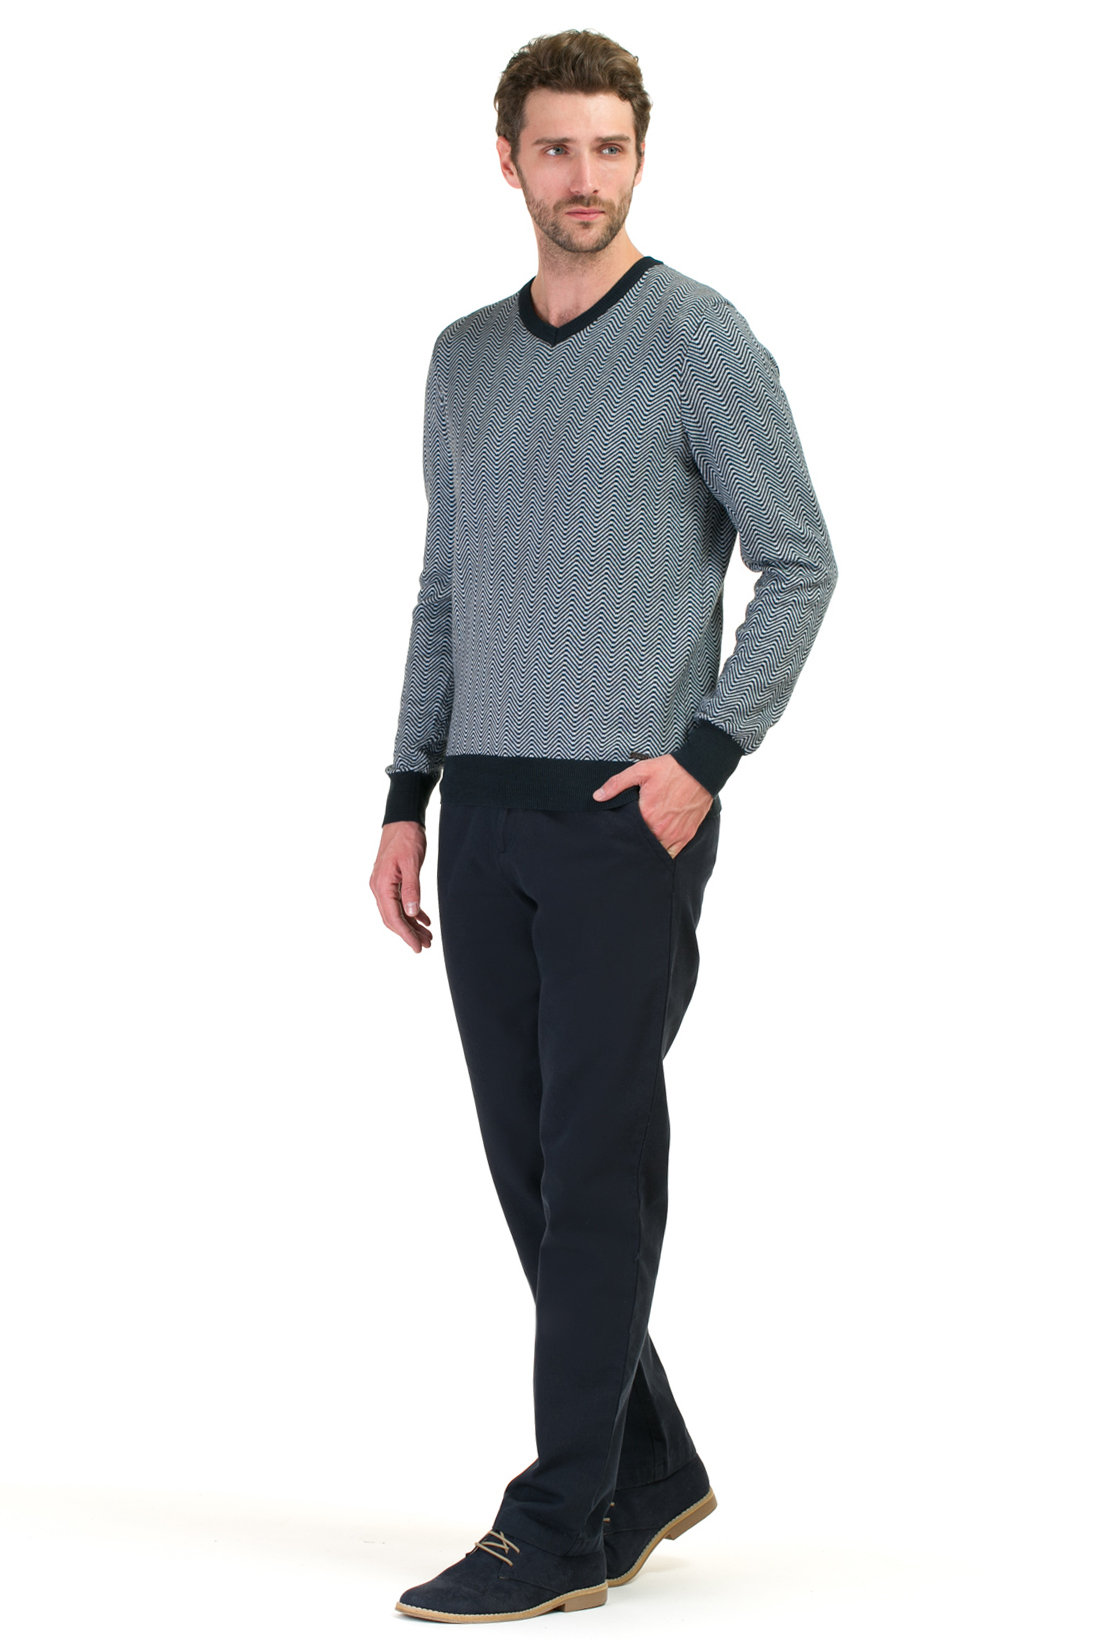 Пуловер с твидовым узором (арт. baon B637009), размер XXL, цвет синий Пуловер с твидовым узором (арт. baon B637009) - фото 5